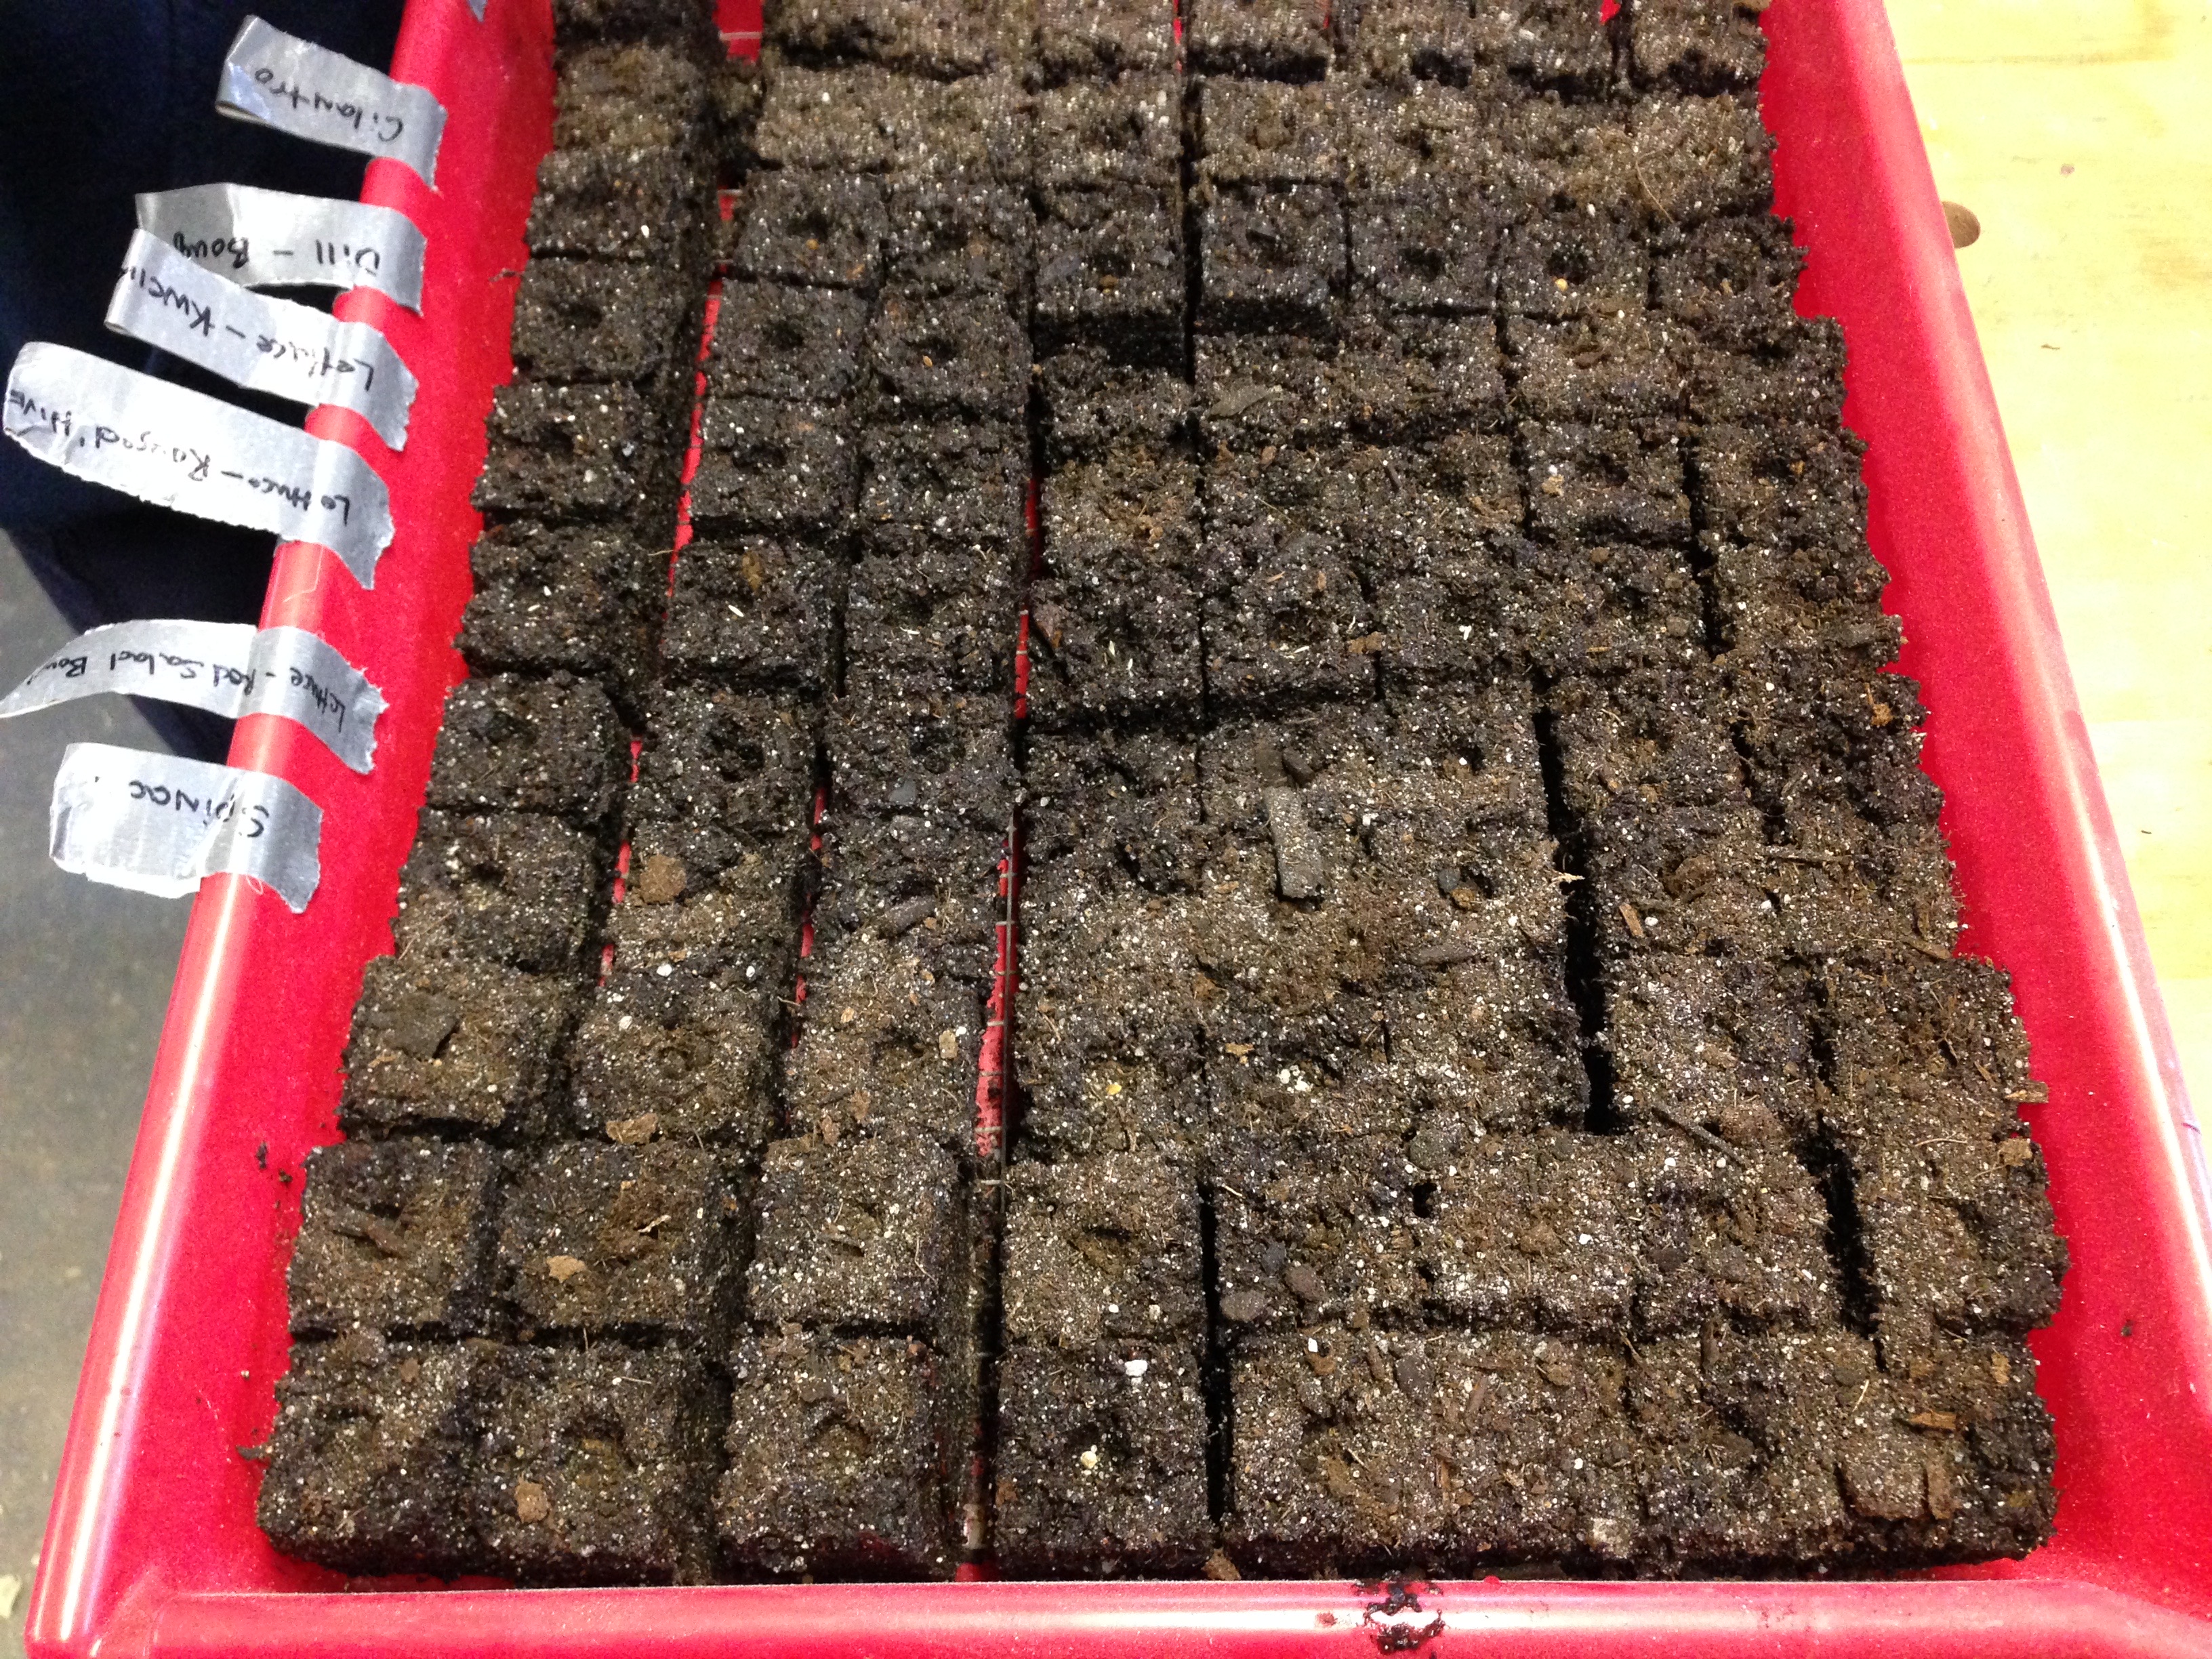 1-1/2" soil blocks in tray